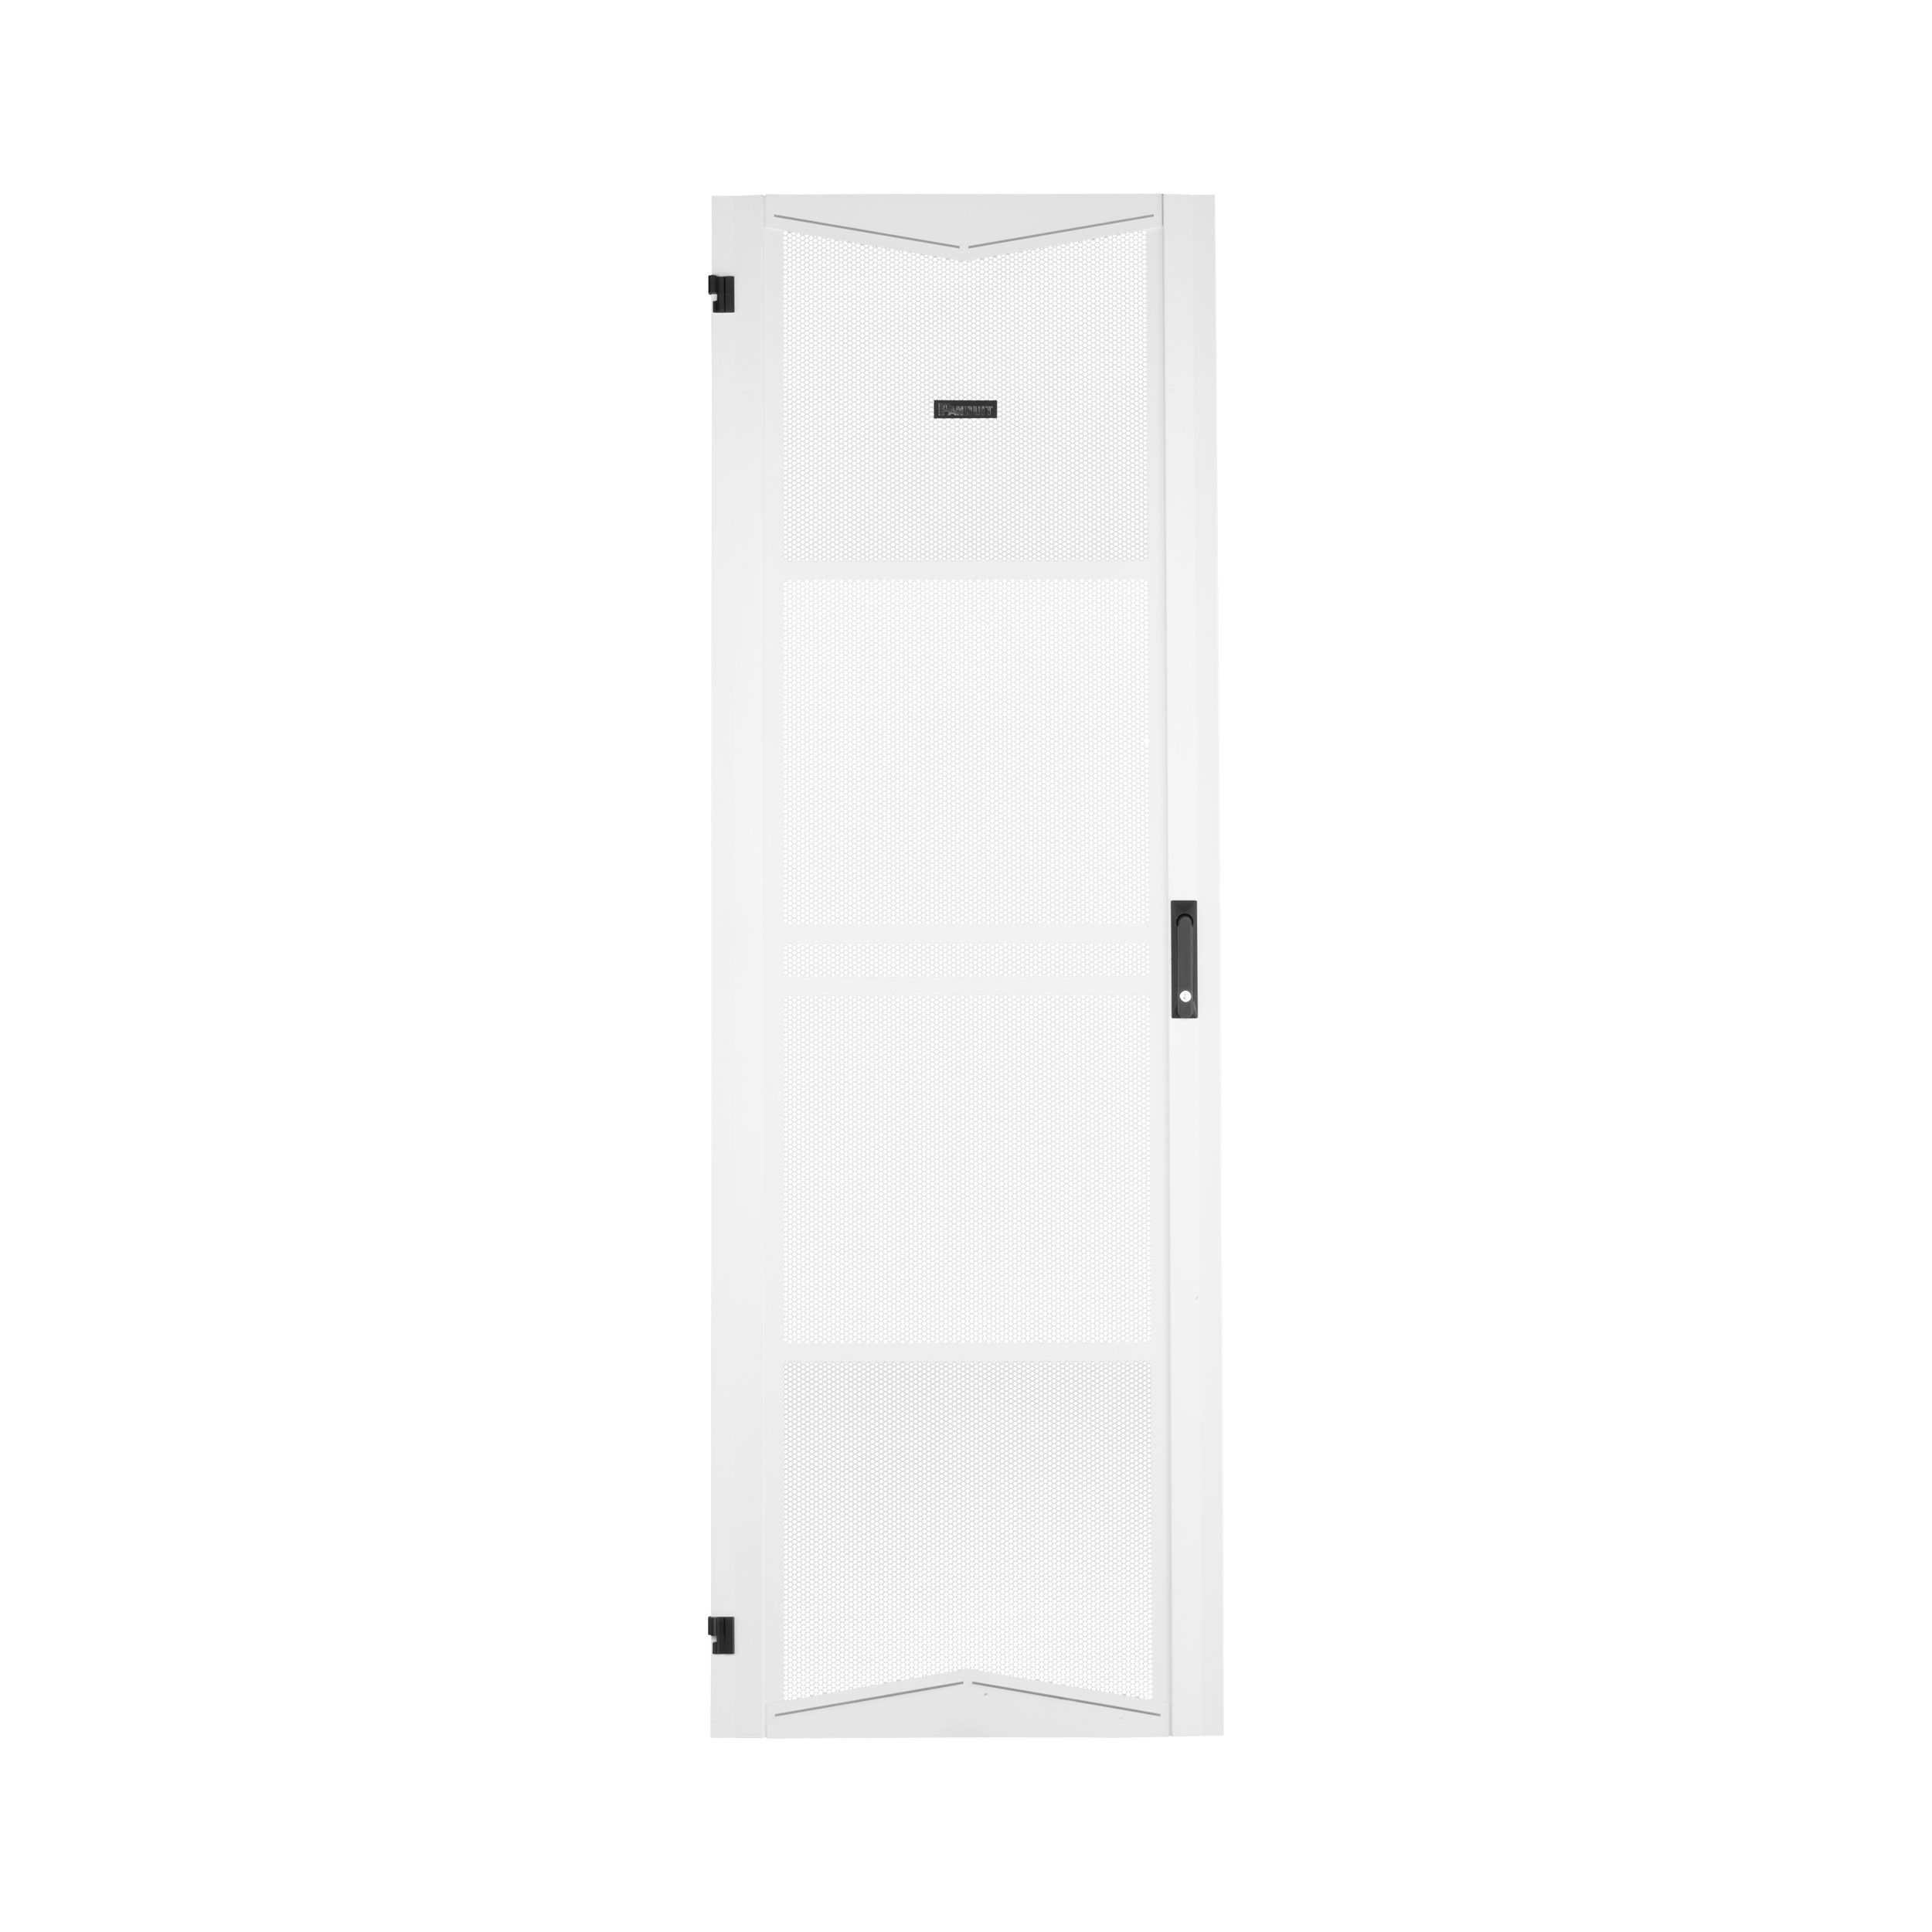 Single Hinged Door, Perforated, 600mmx45RU, White